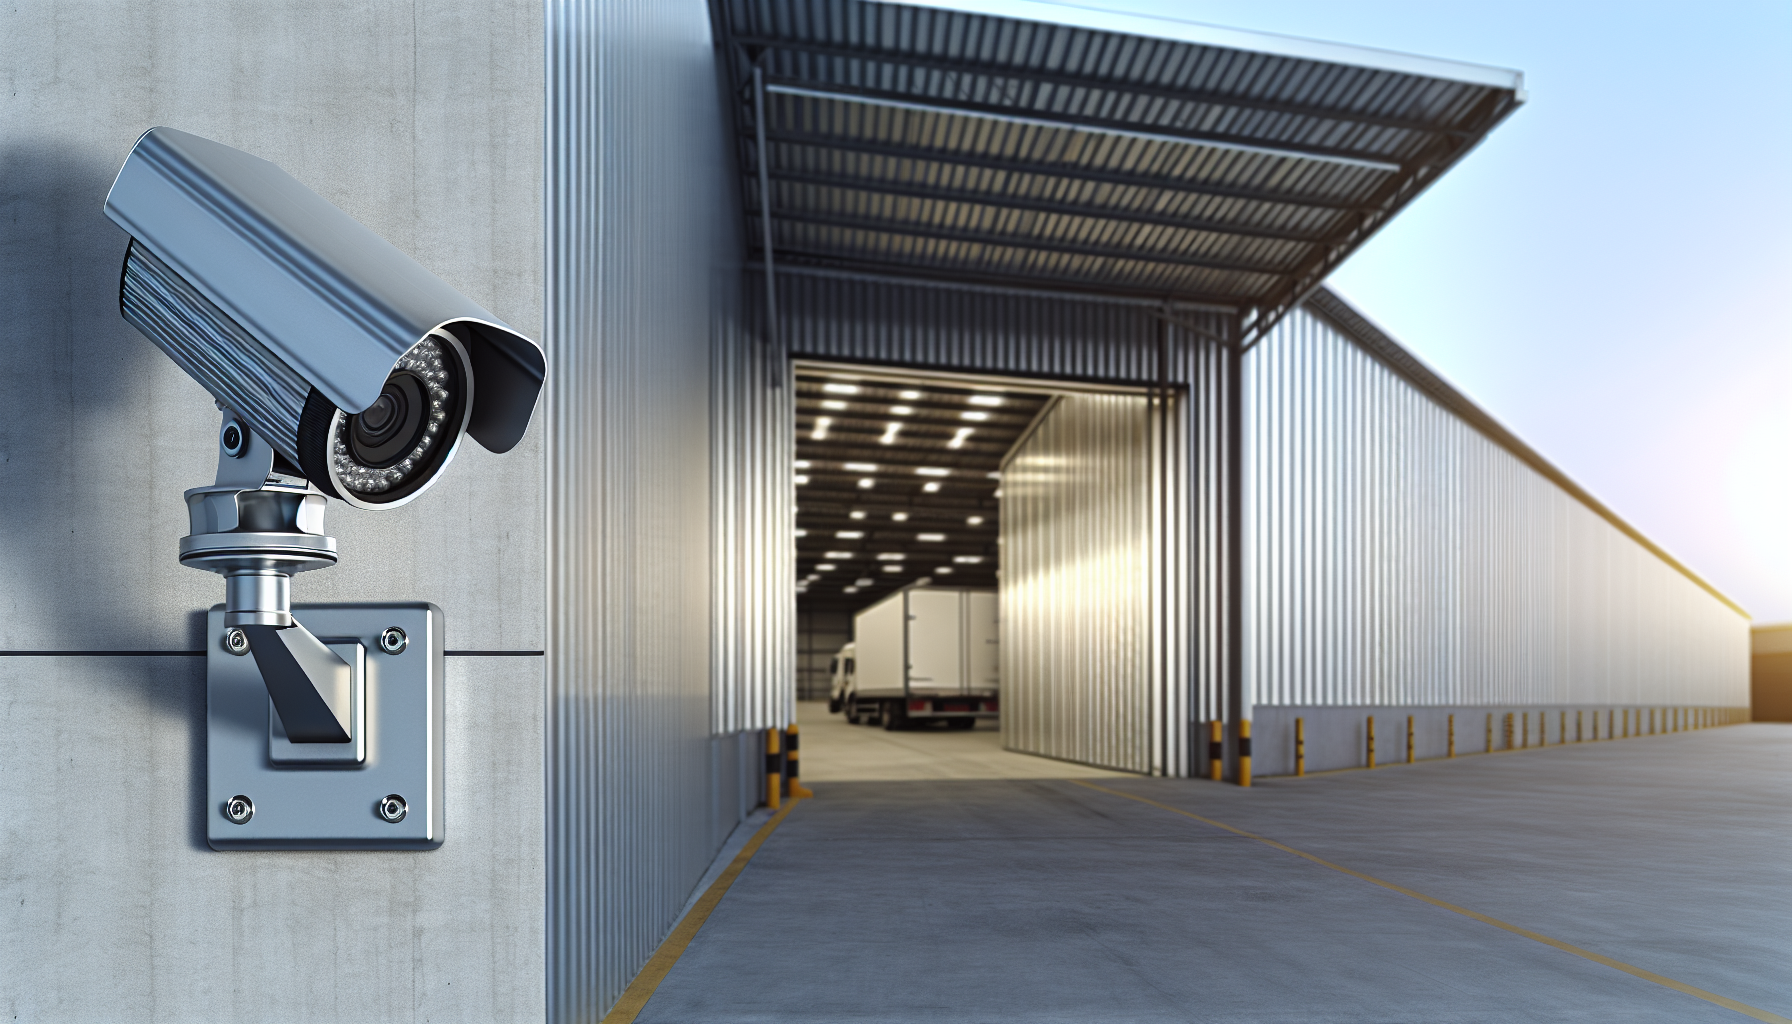 Security camera monitoring warehouse entrance